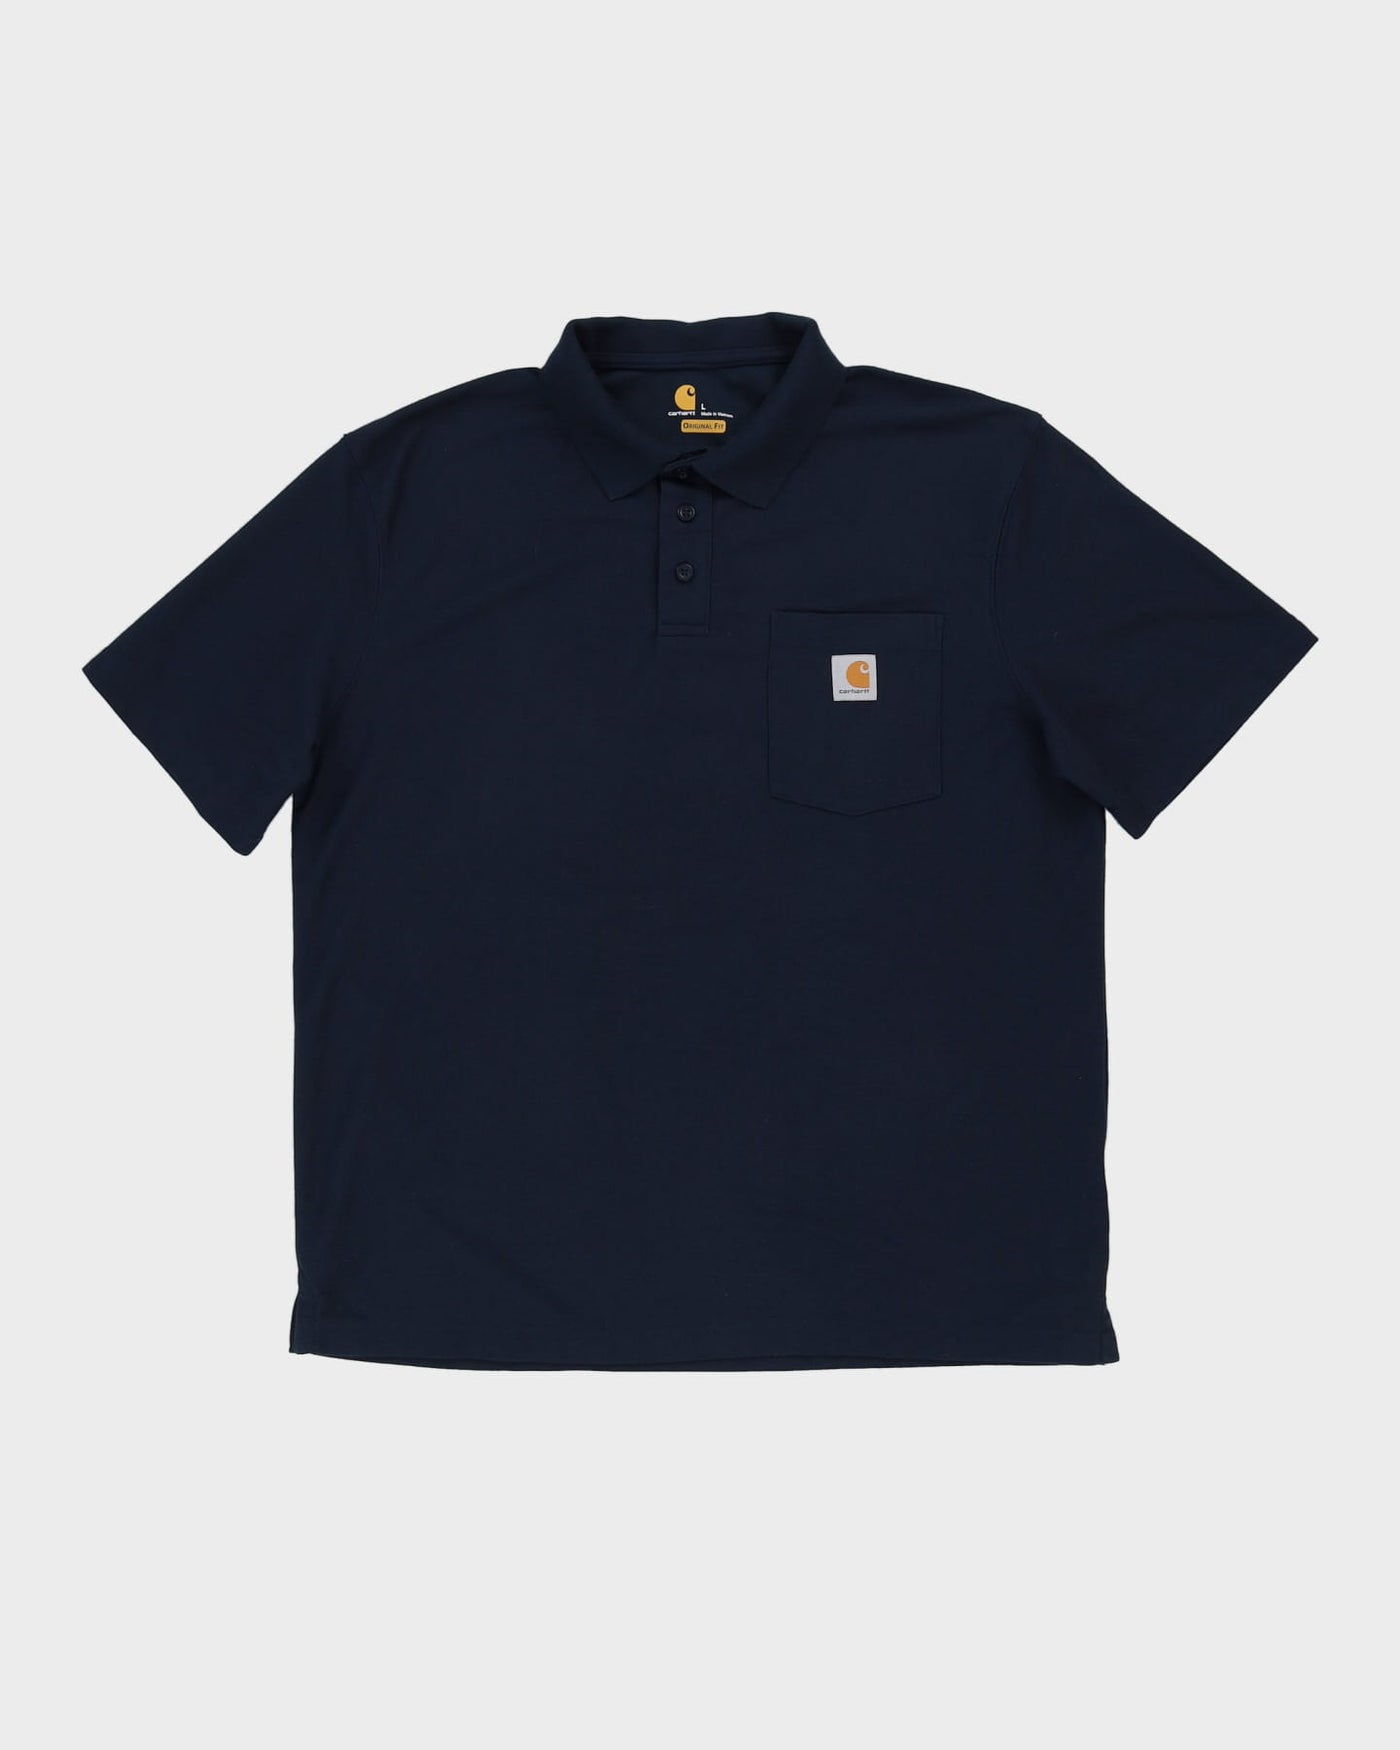 Carhartt Navy Pocket Polo Shirt - L